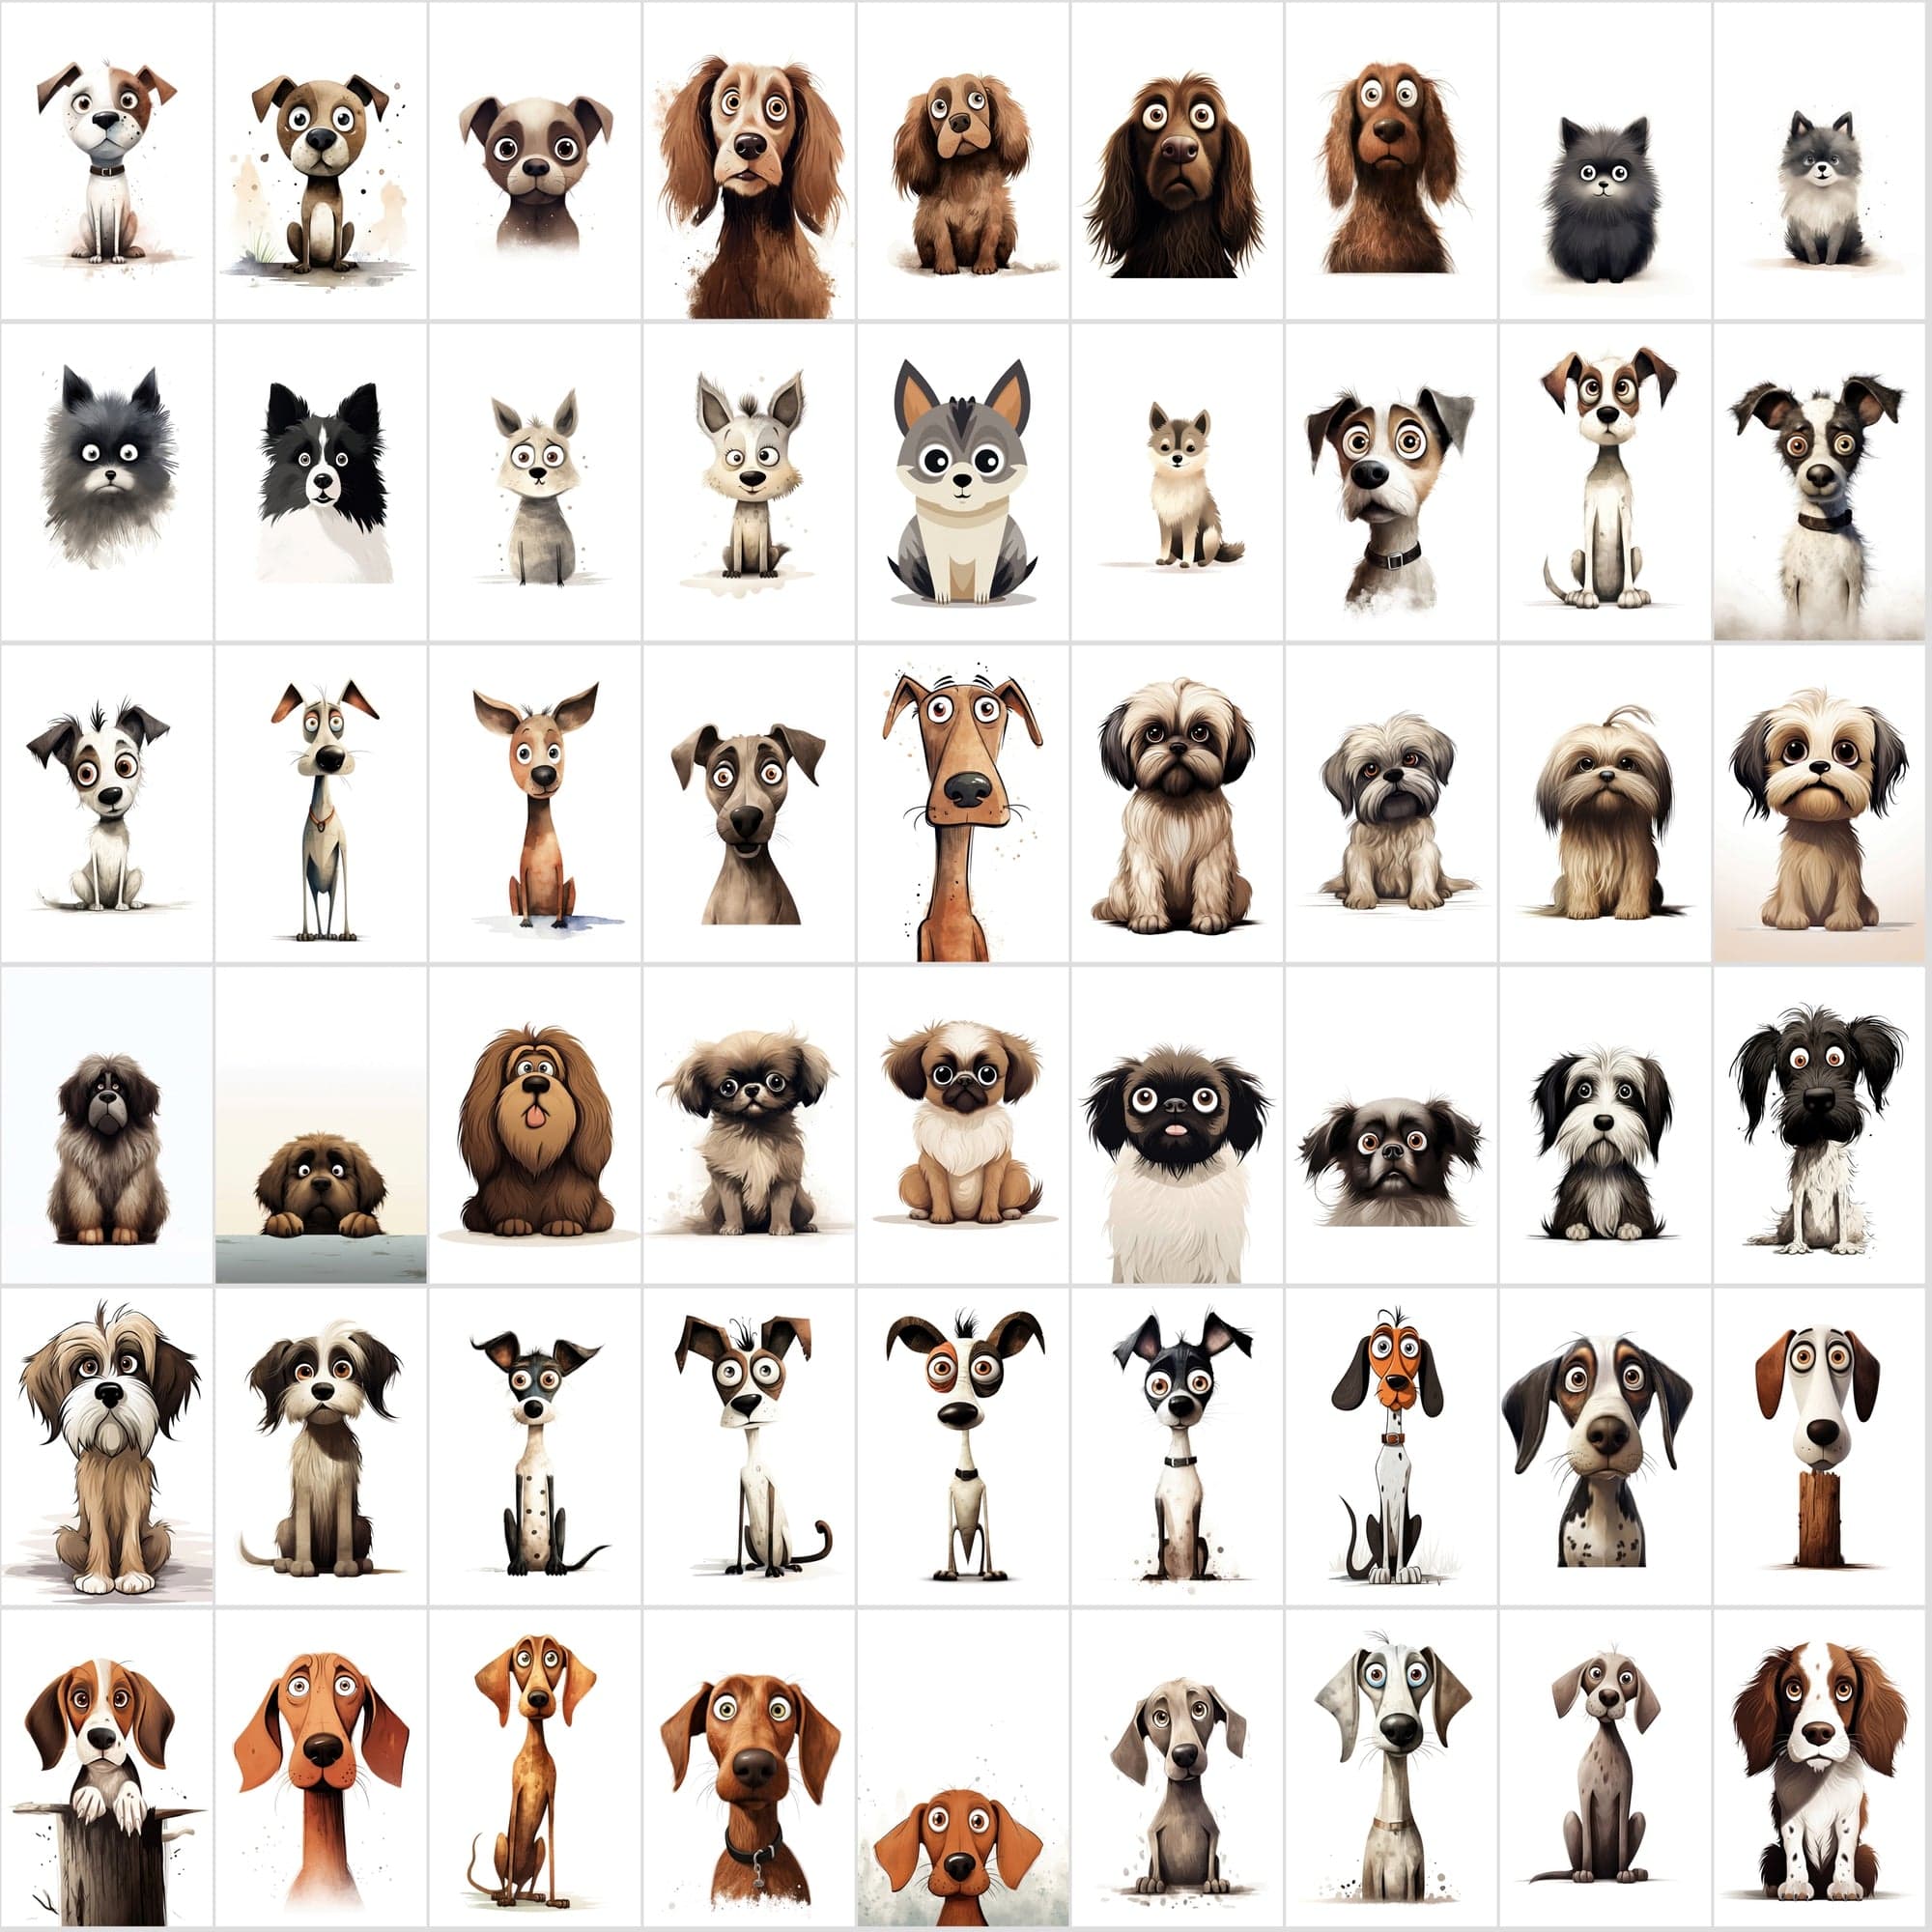 780 Funny Scared Dog Images Collection - High-Resolution JPG & PNG, Commercial License Digital Download Sumobundle